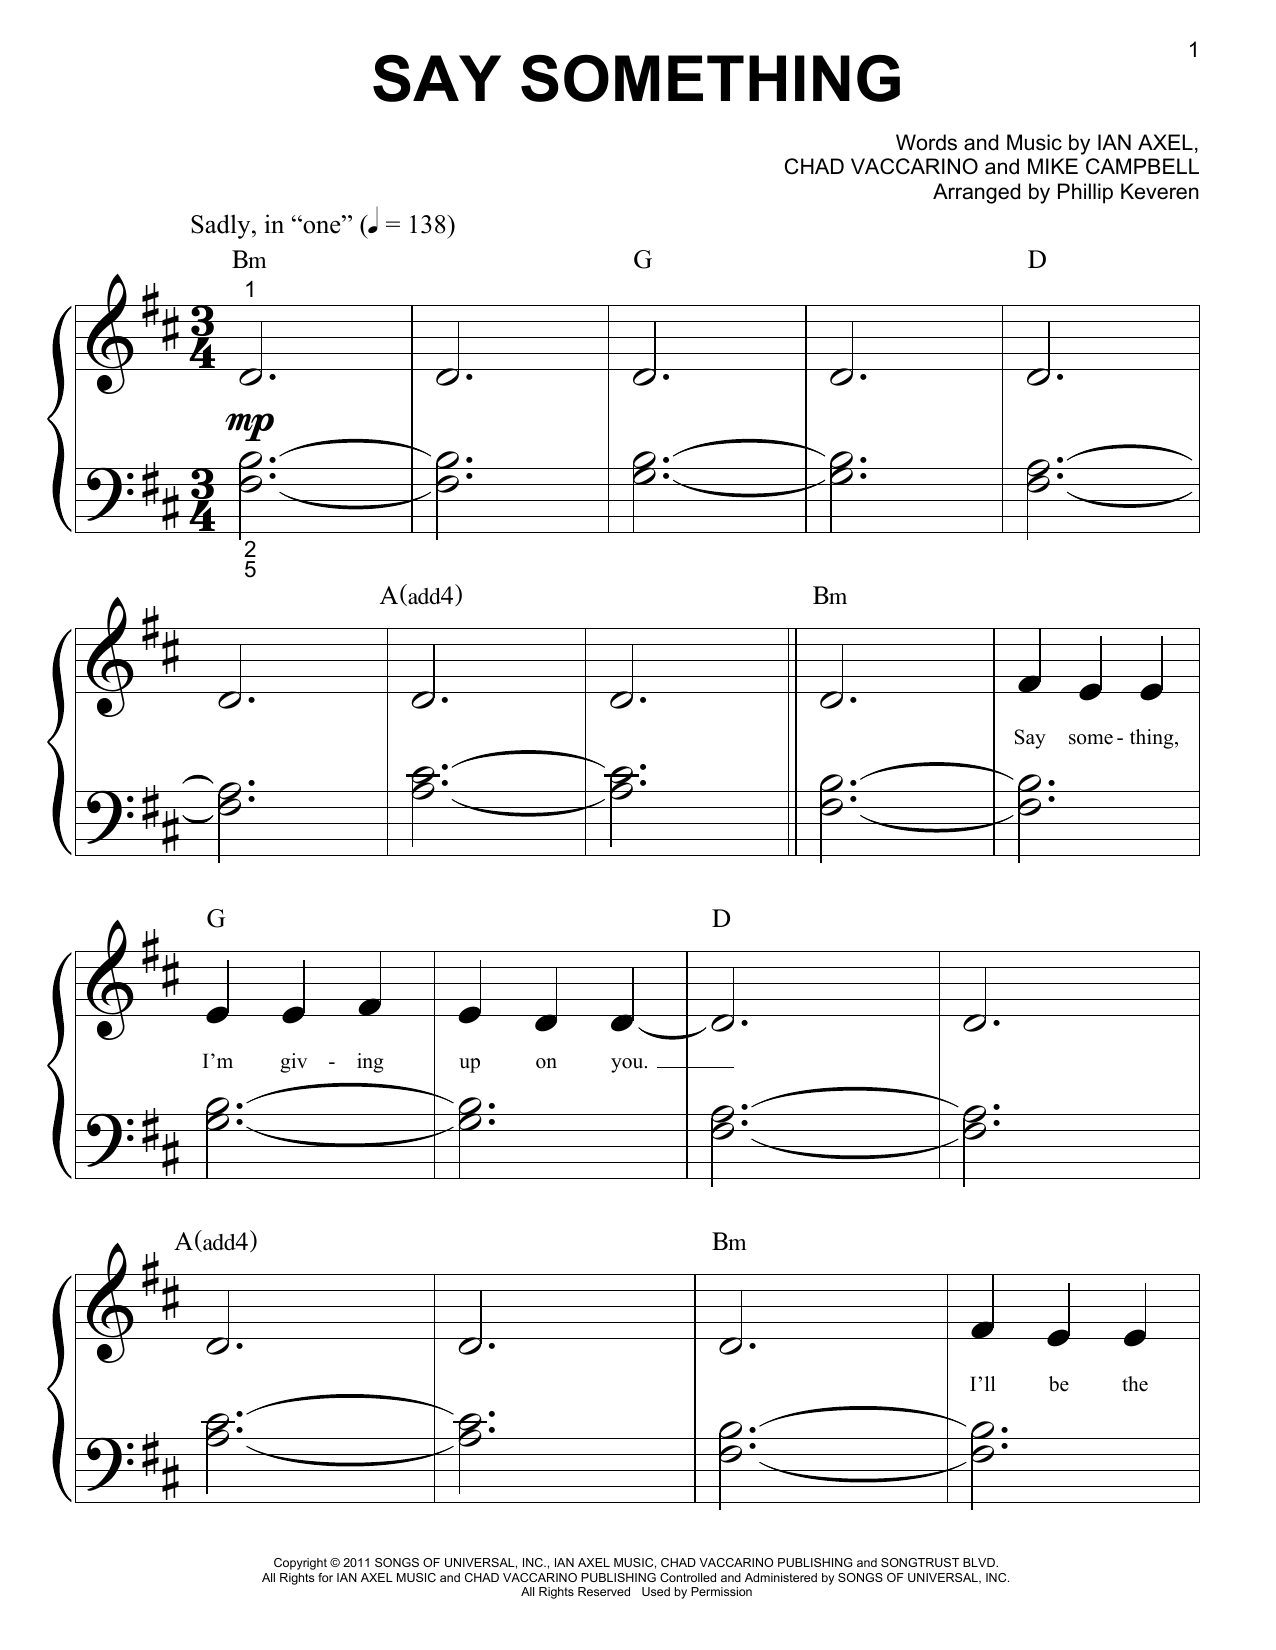 A Great Big World and Christina Aguilera Say Something Sheet Music Notes & Chords for Piano (Big Notes) - Download or Print PDF